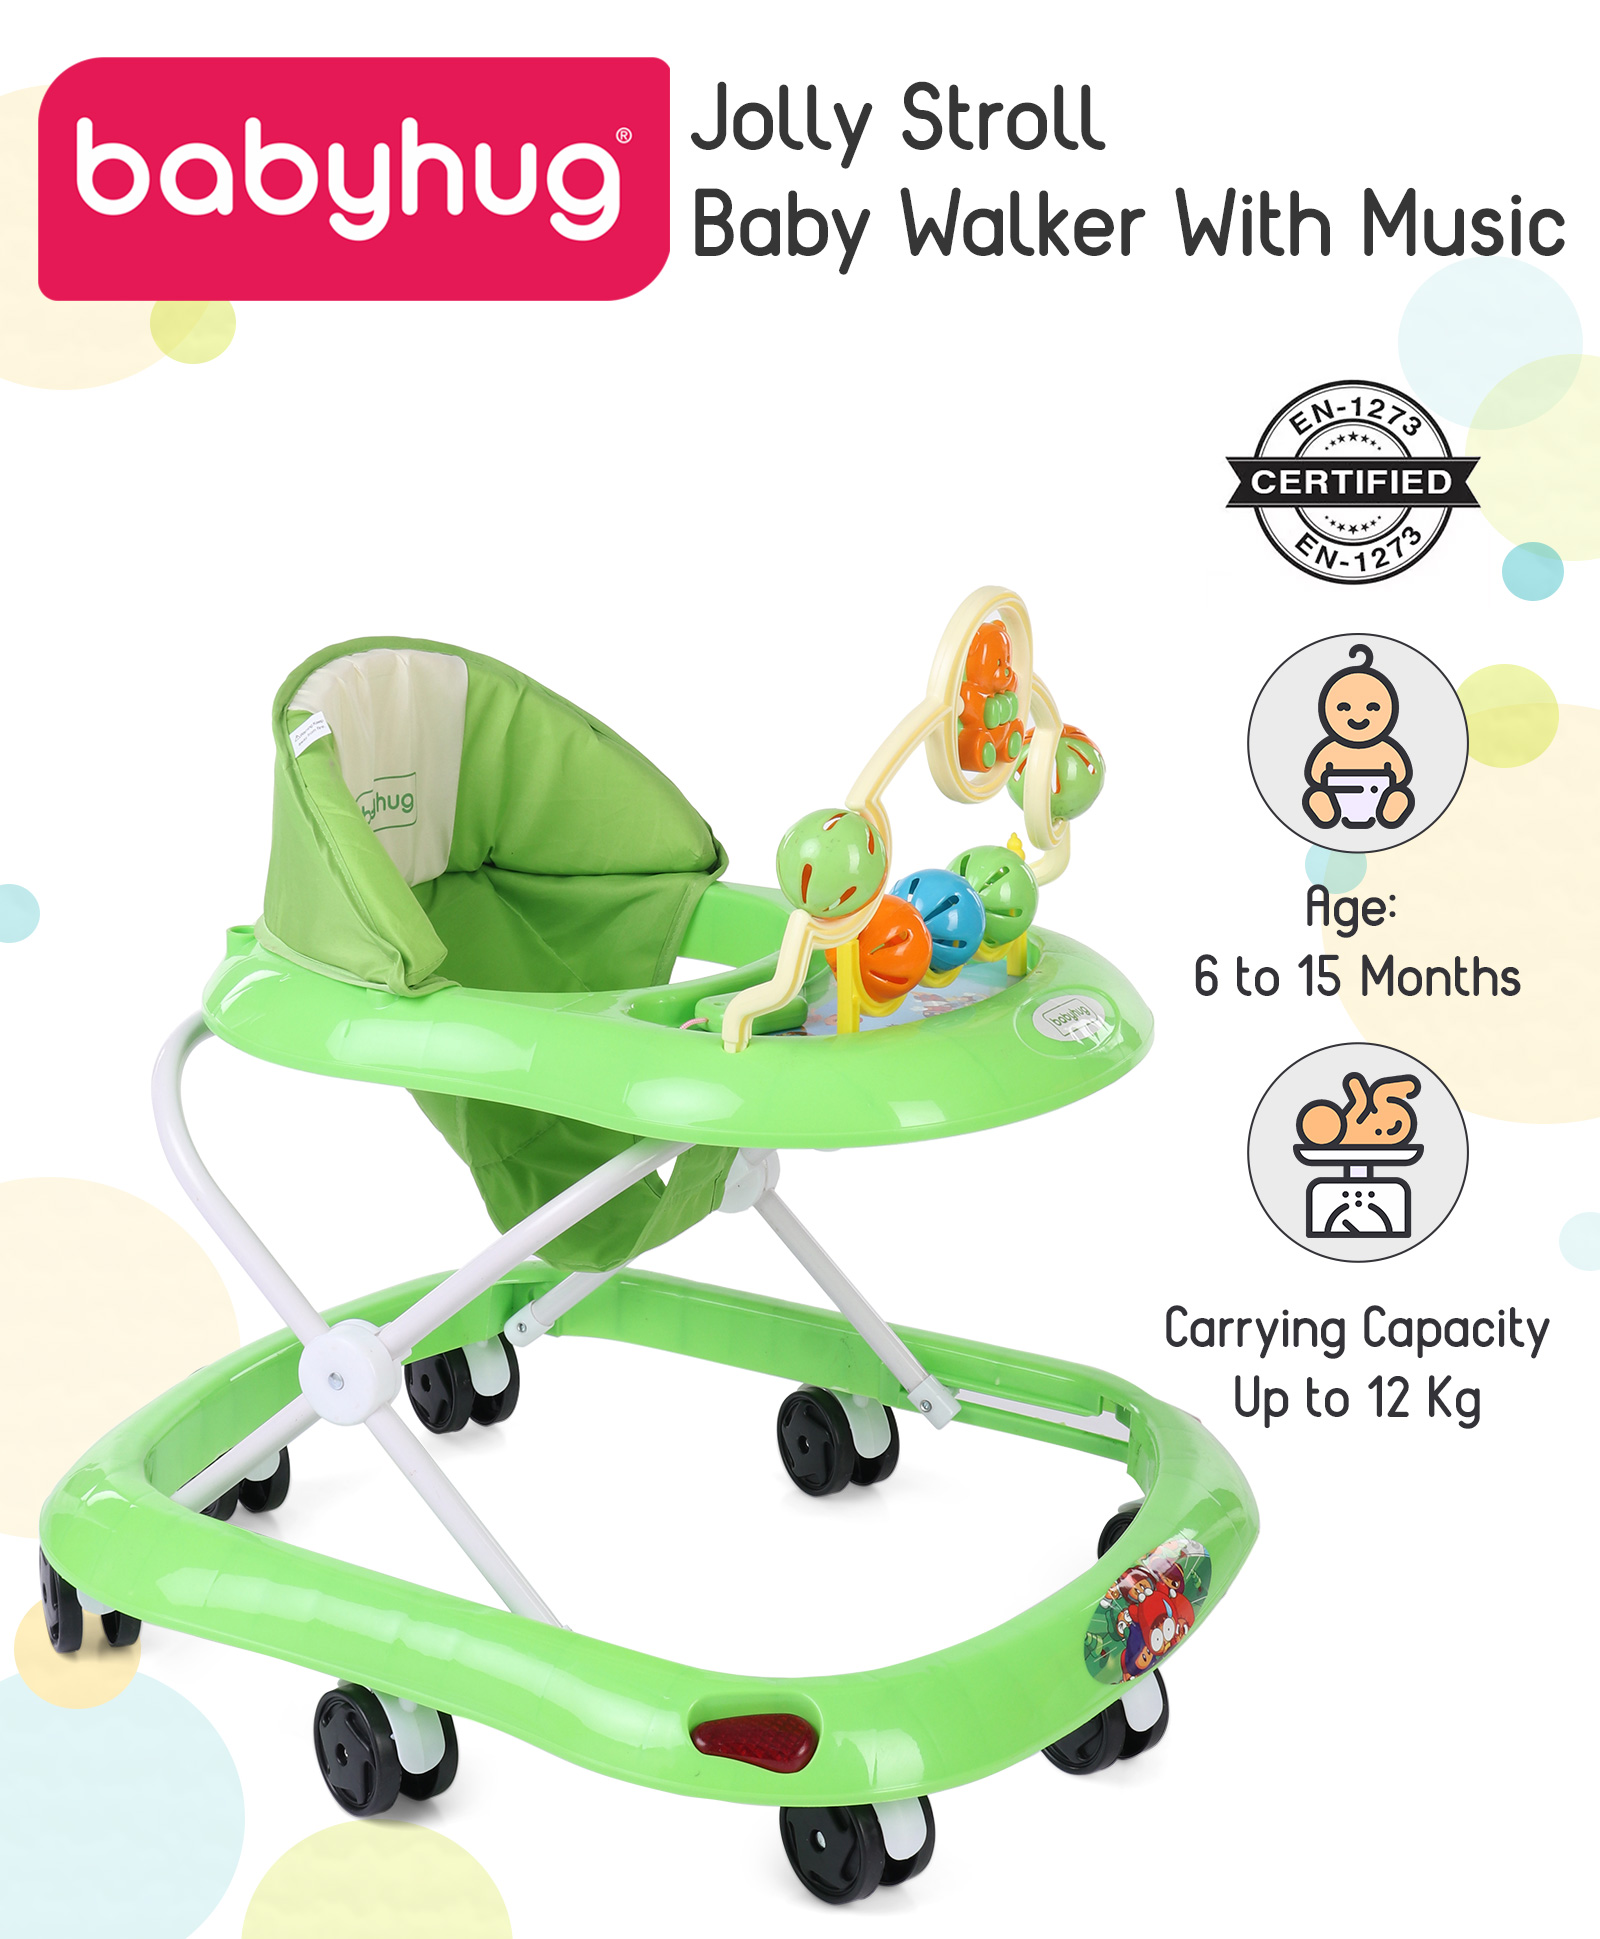 babyhug jolly stroll baby walker